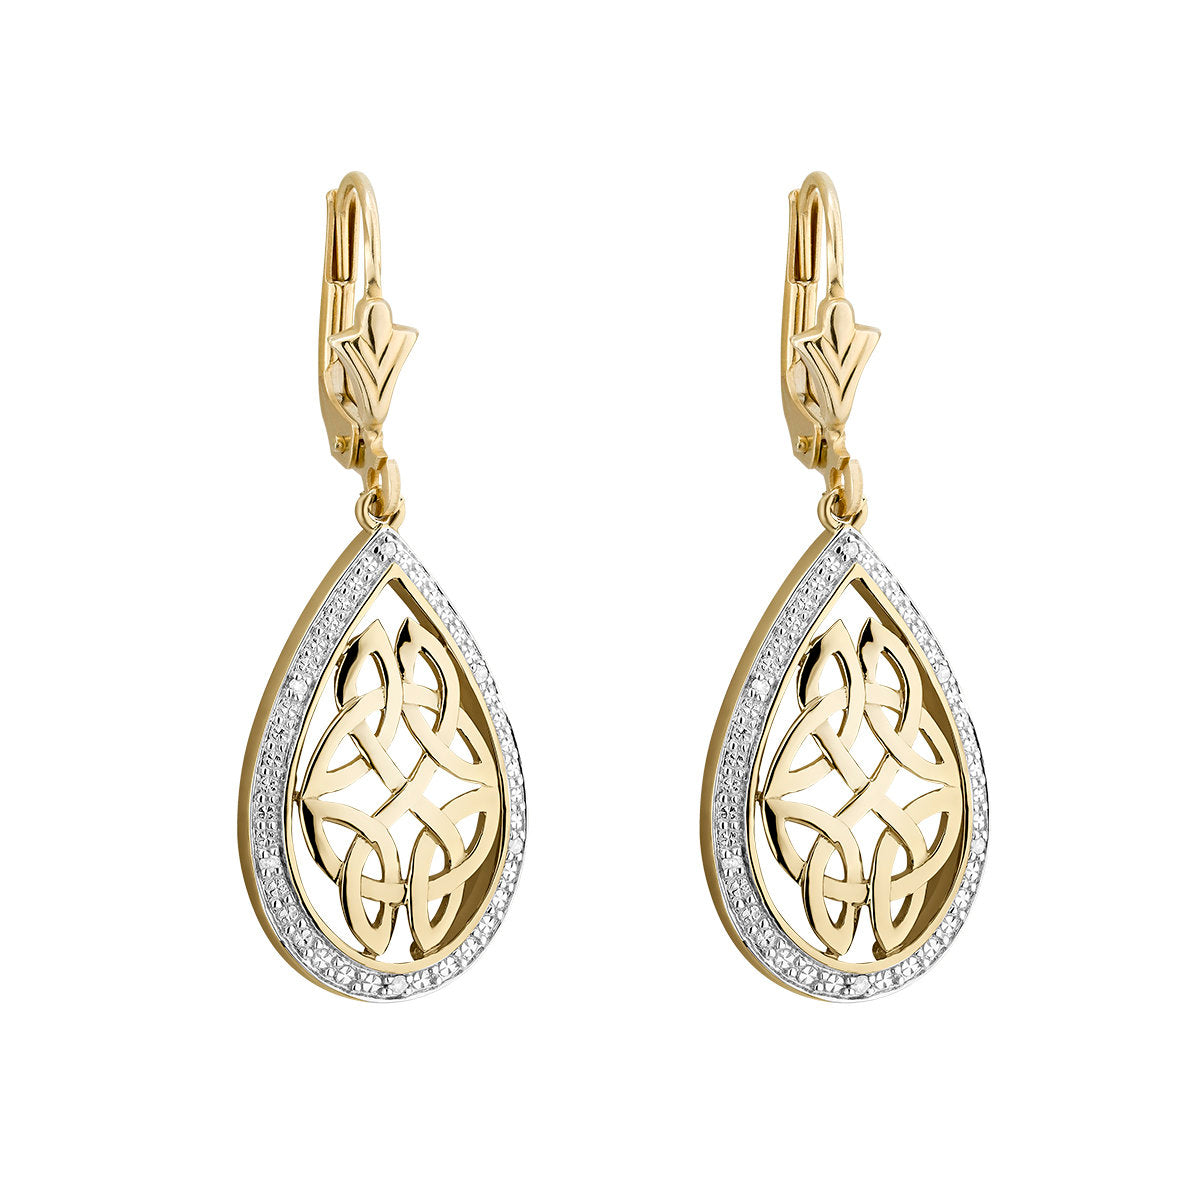 10ct Gold Diamond Oval Celtic Knot Drop Earrings